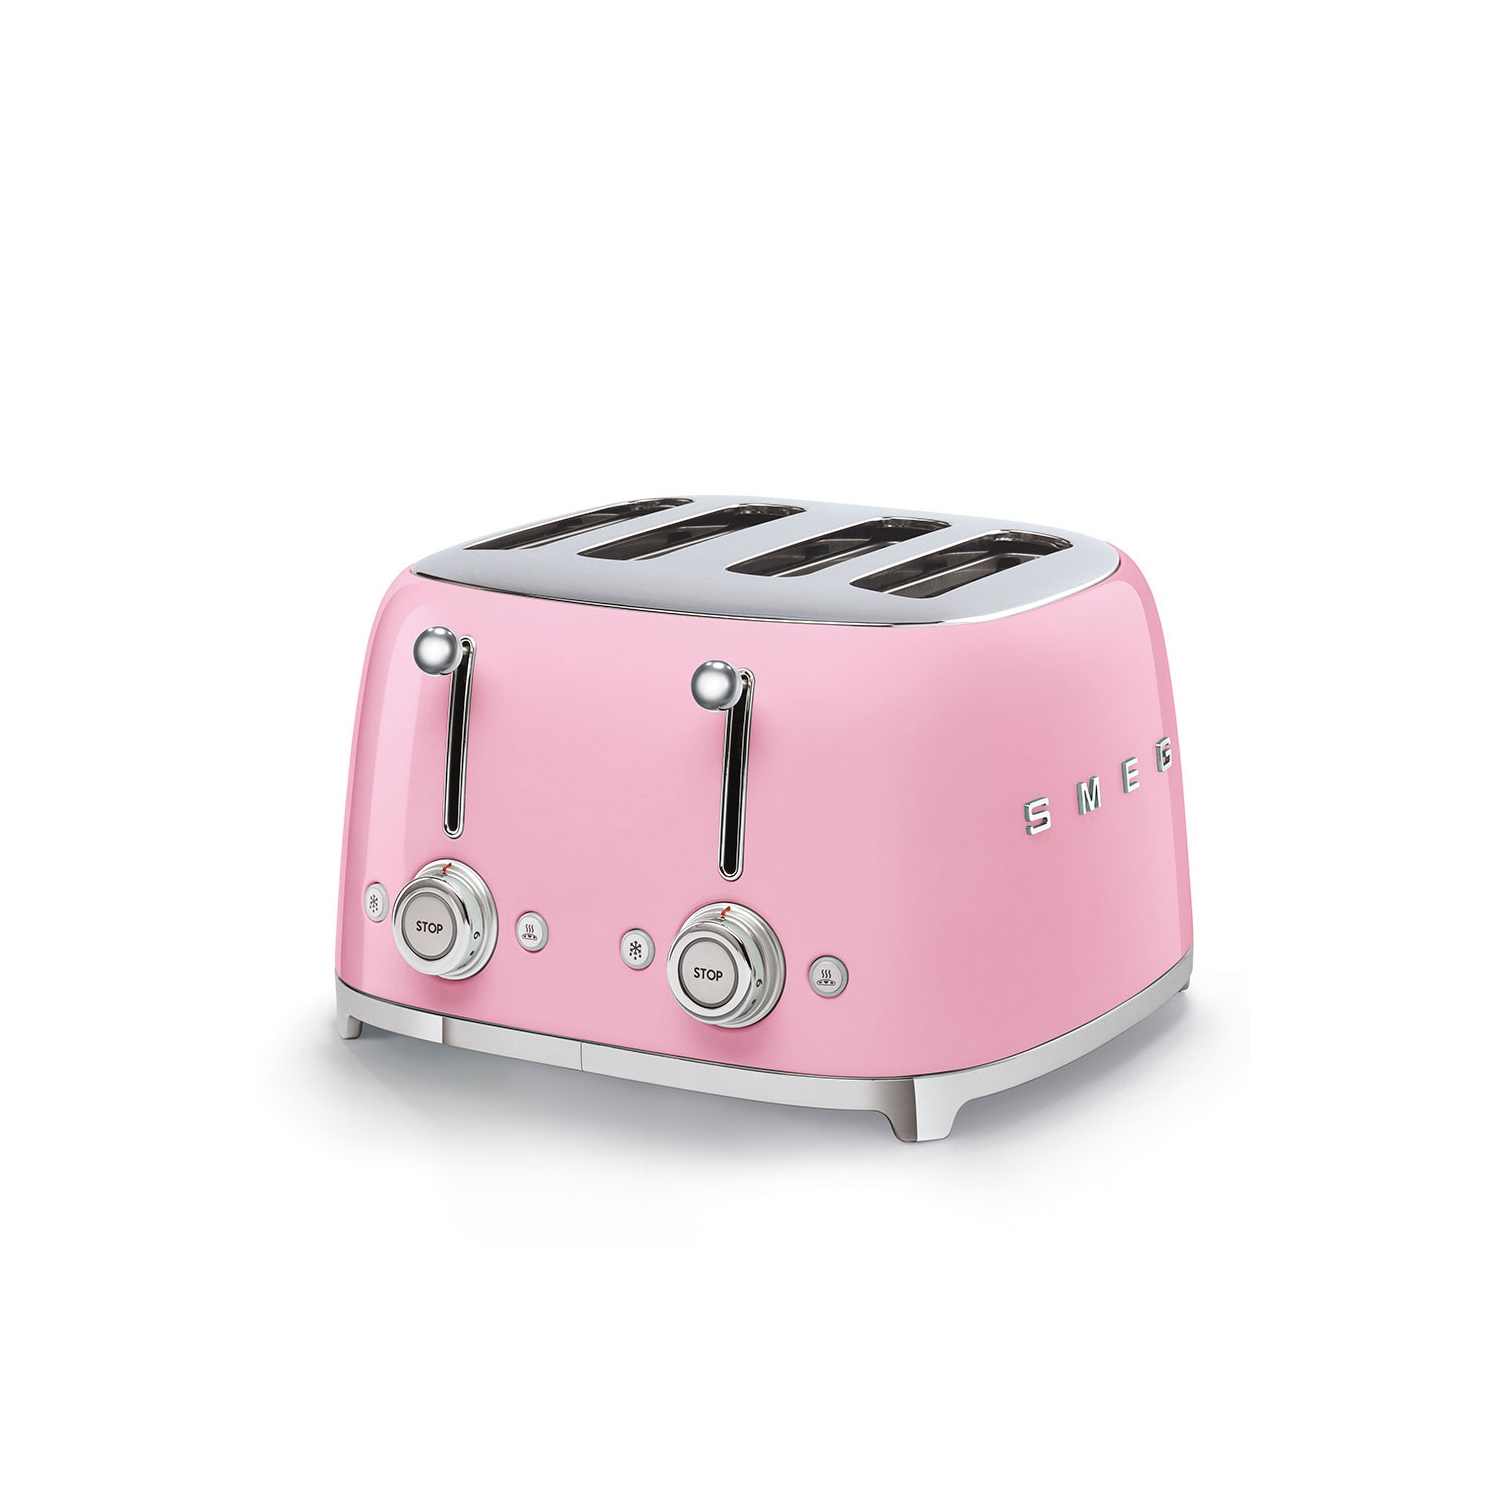 Smeg 4 Slice Toaster - Pink - 1